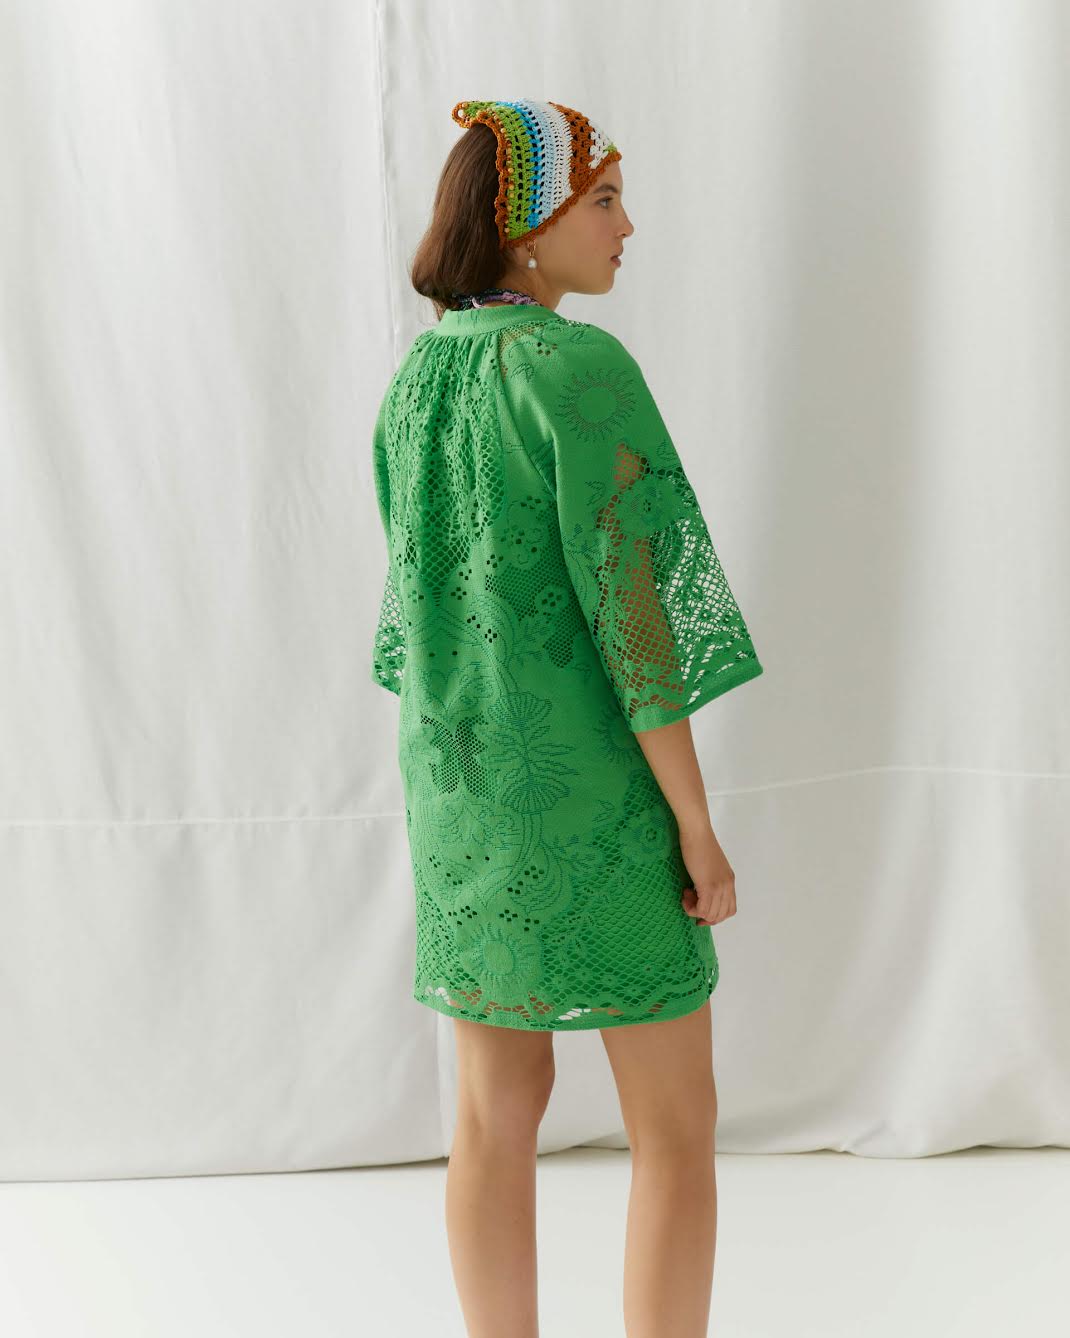 Beatrice B - Soleil Flash Green Lace Dress